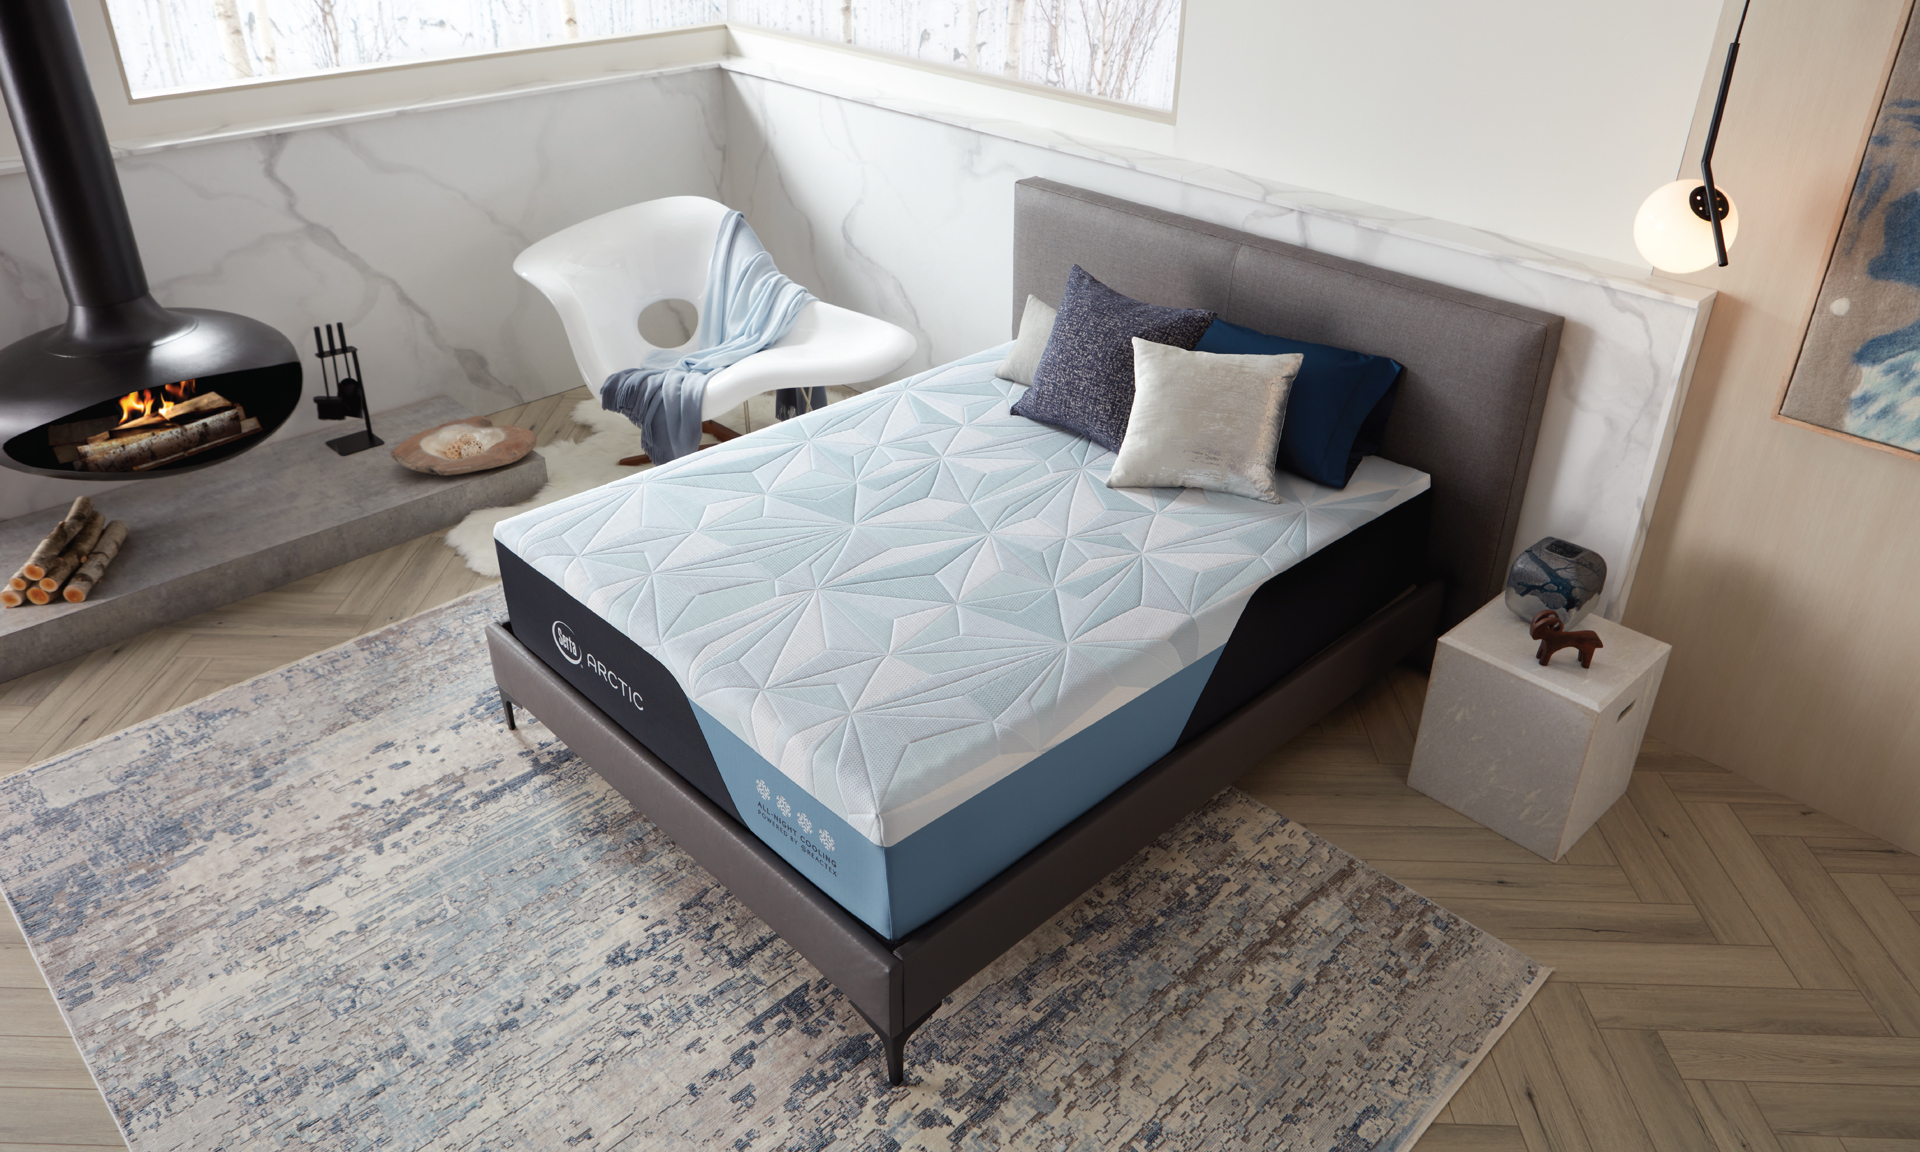 Serta Arctic mattress help you find a cool night's sleep.